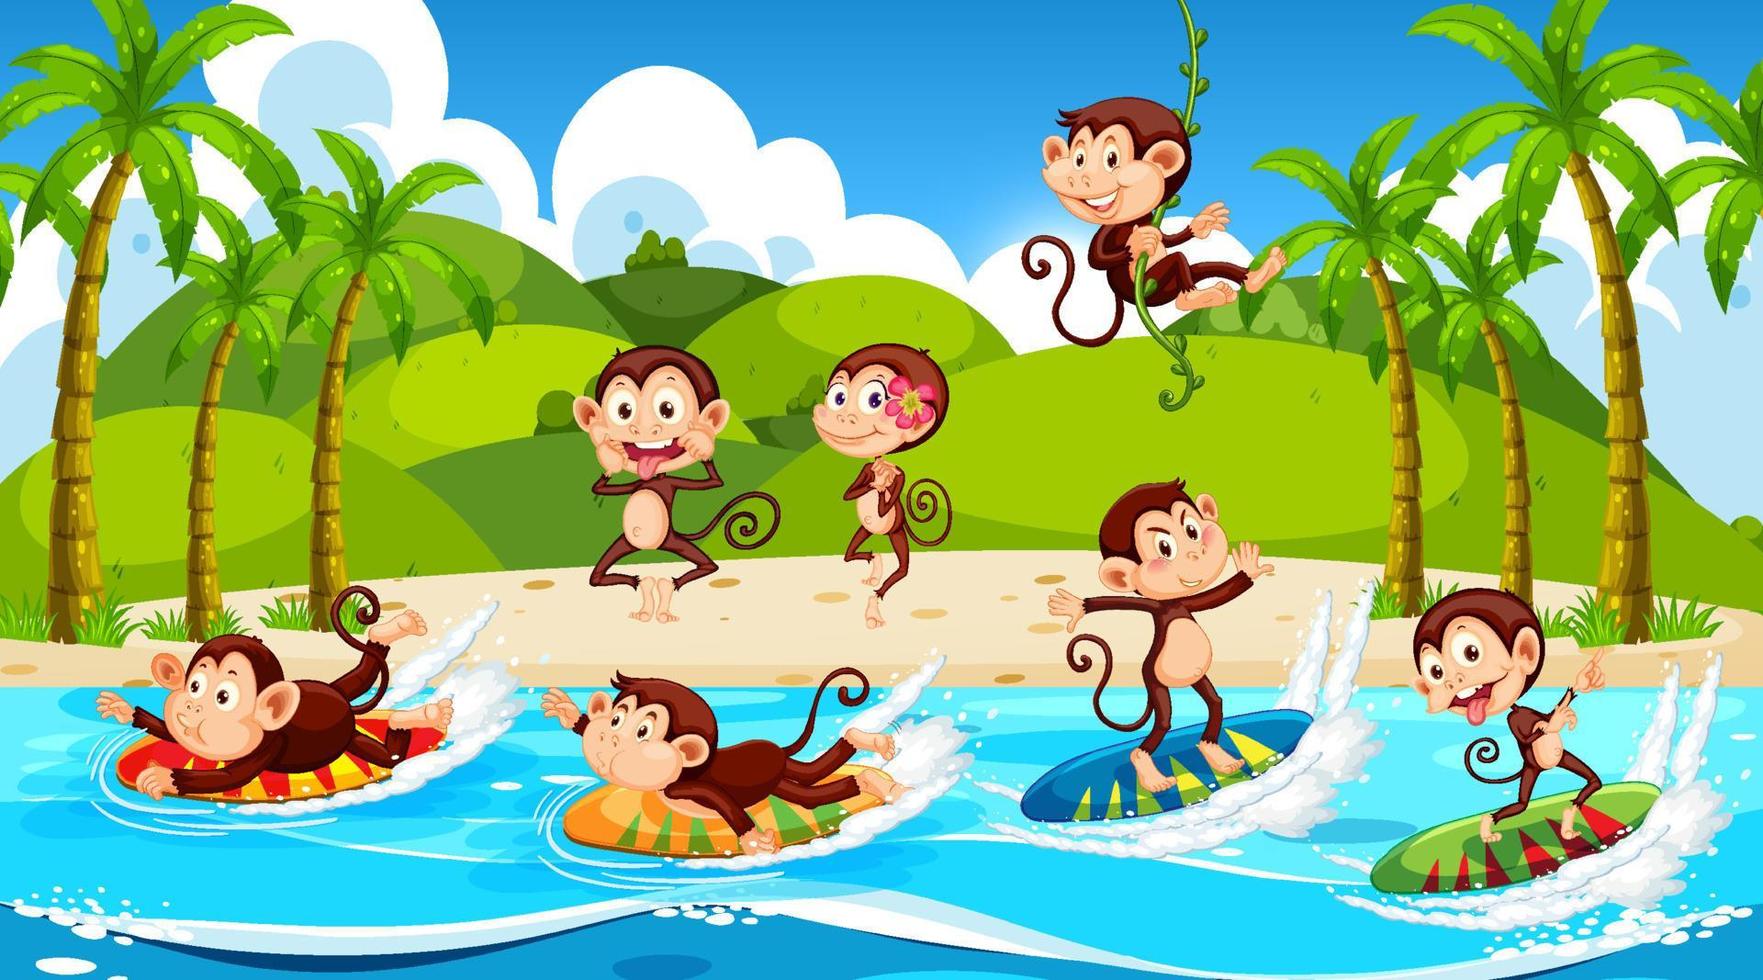 Escena de playa con monos realizando diferentes actividades. vector